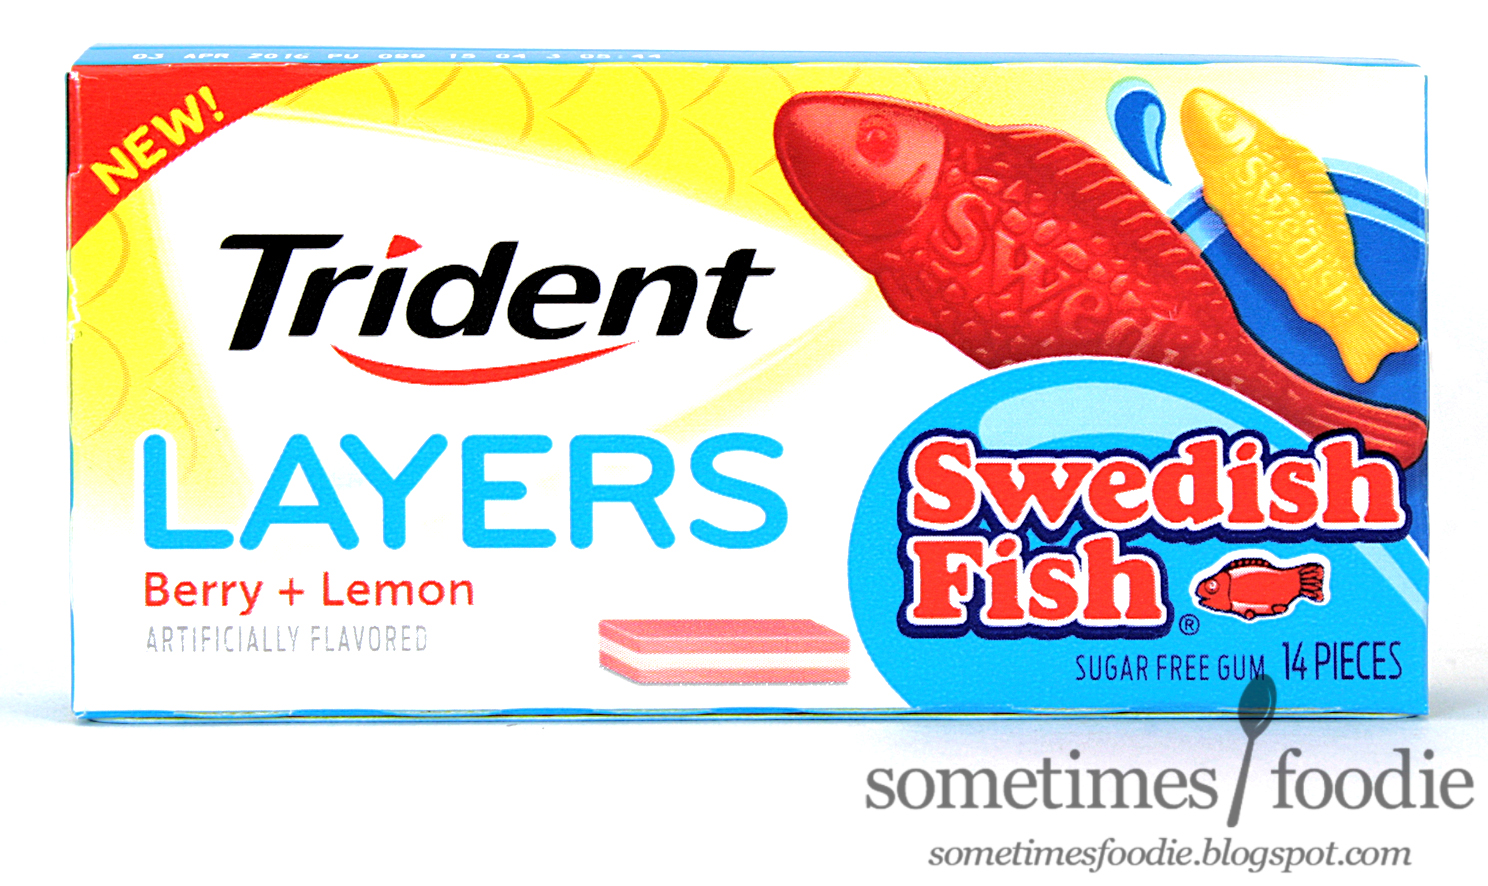 Sometimes Foodie: Swedish Fish Trident Layers Gum - Gift